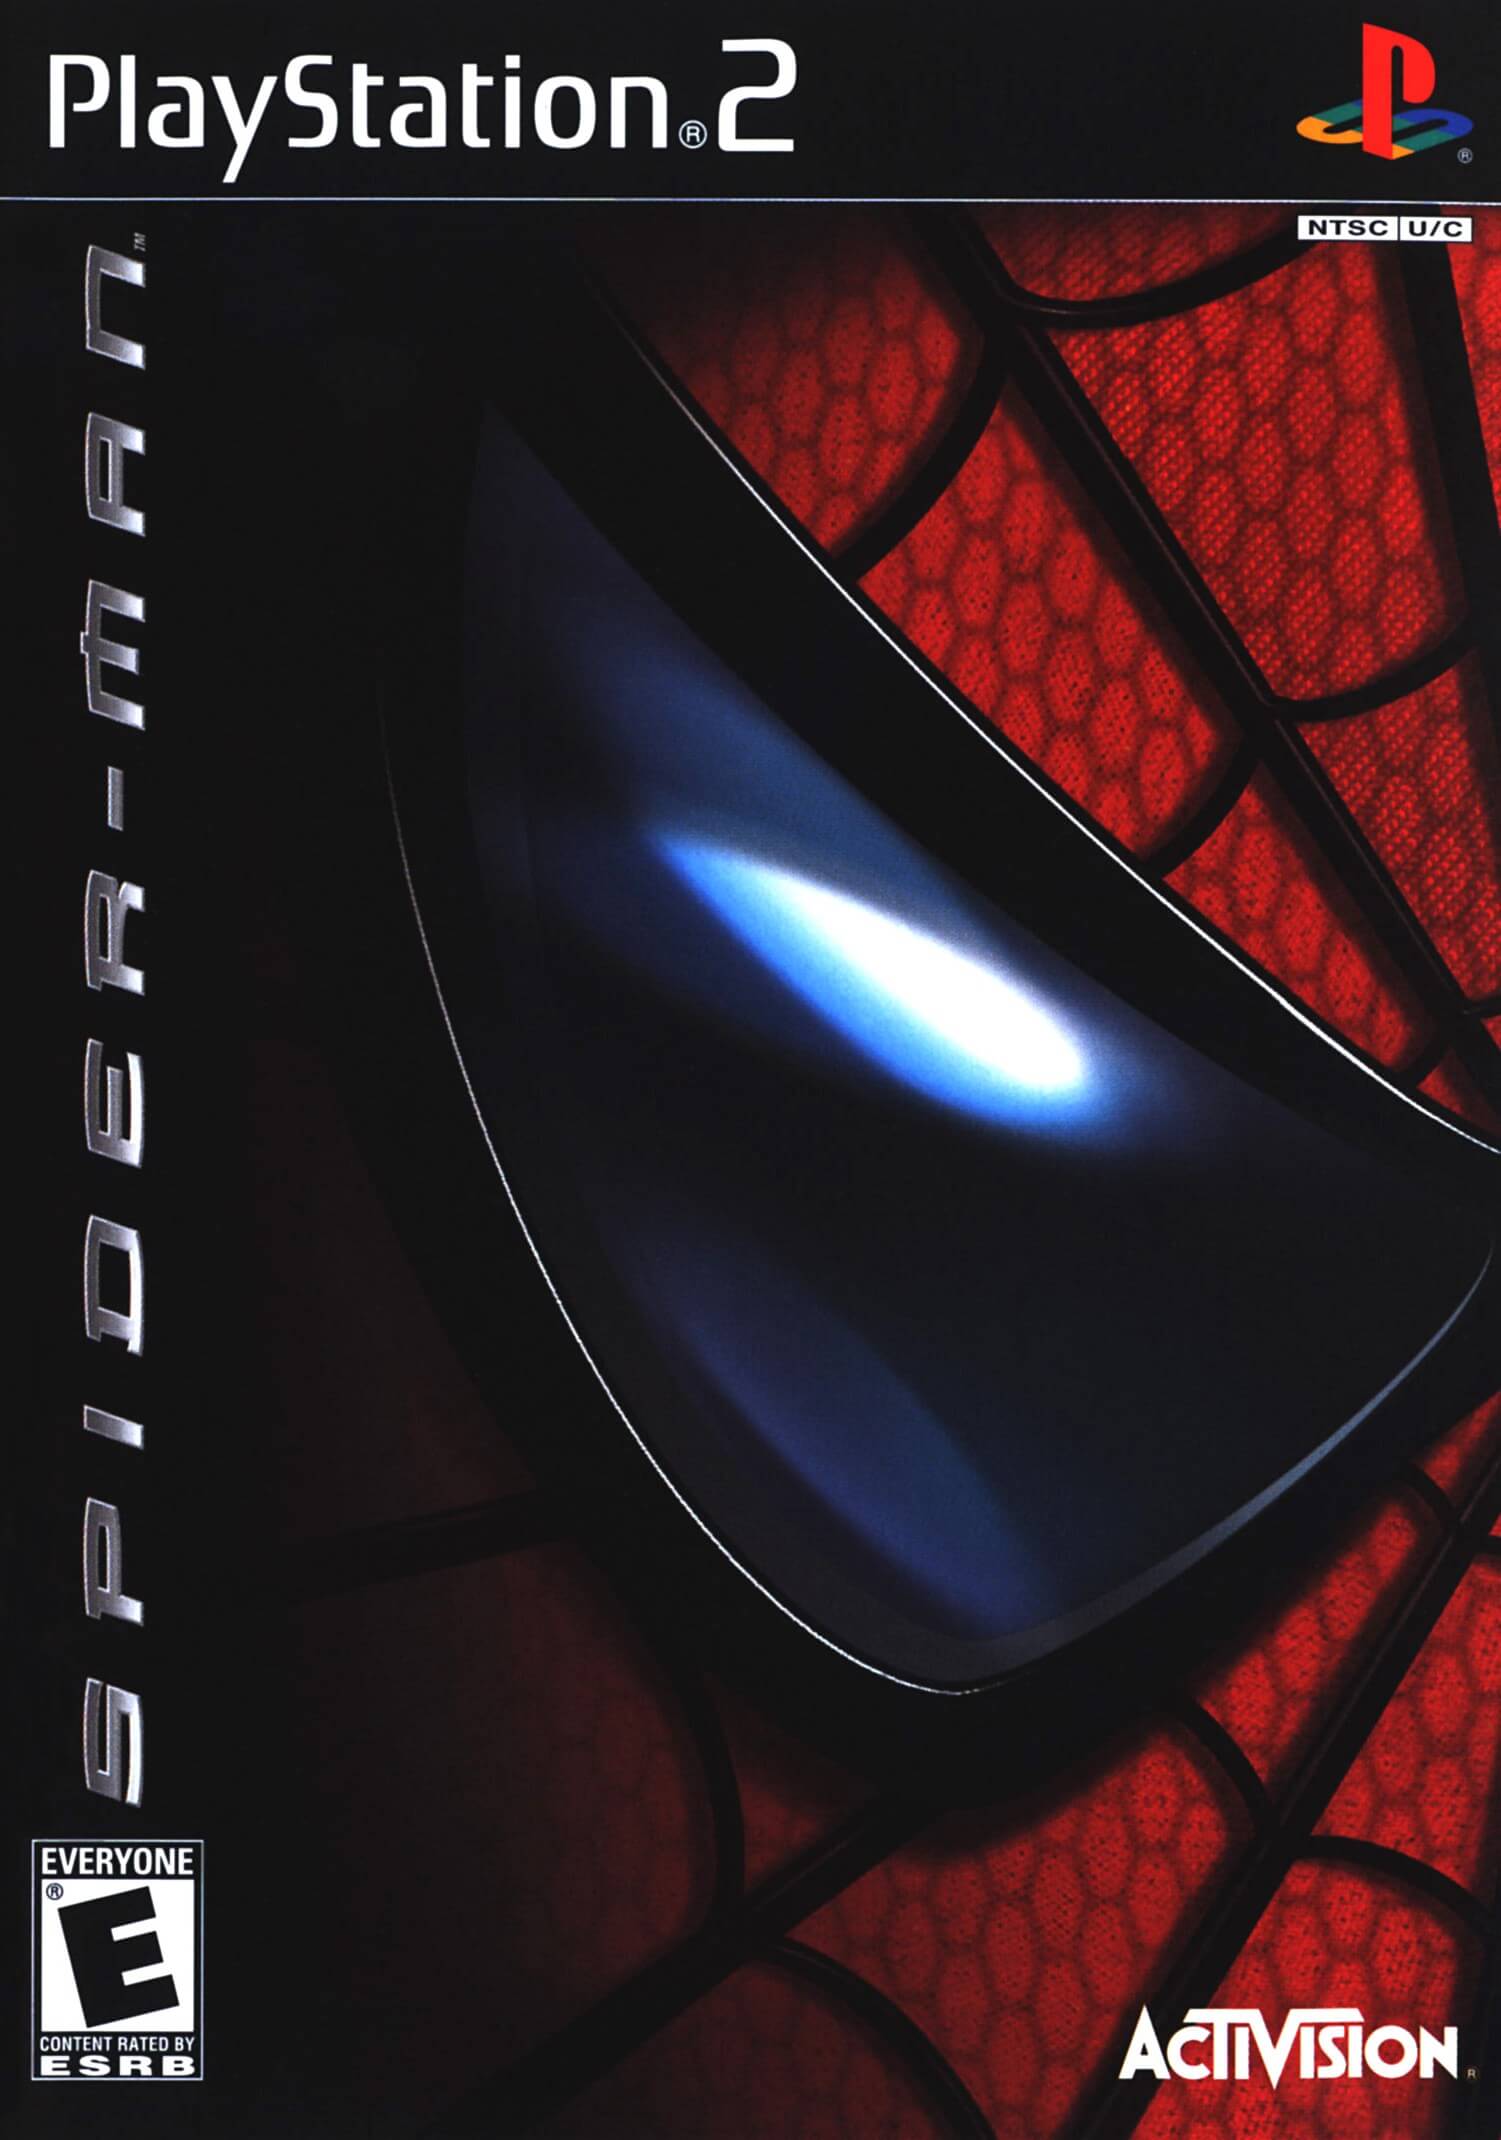 Spider-Man 2 ROM - PS2 Download - Emulator Games